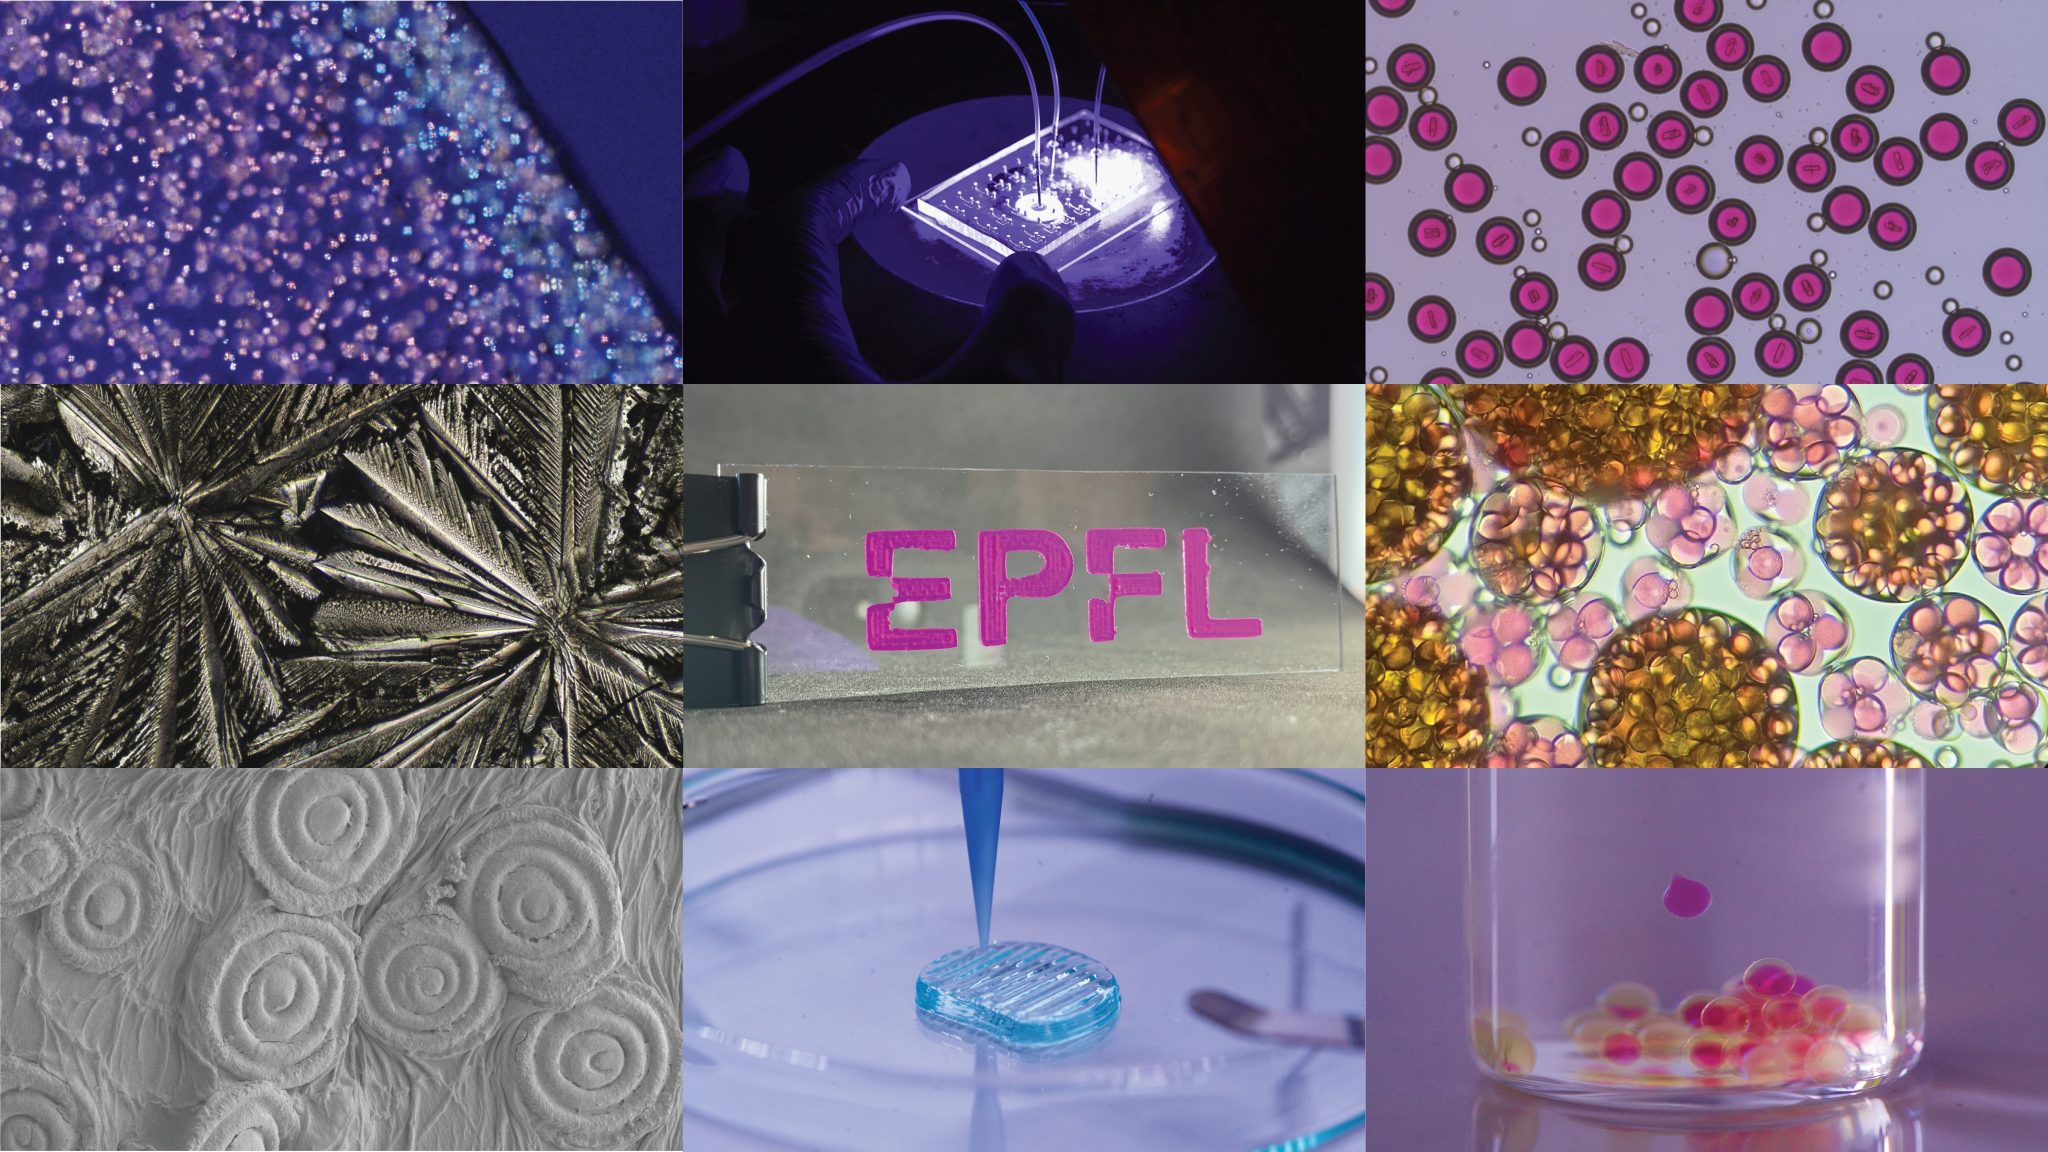 Soft Materials Laboratory â€ EPFL